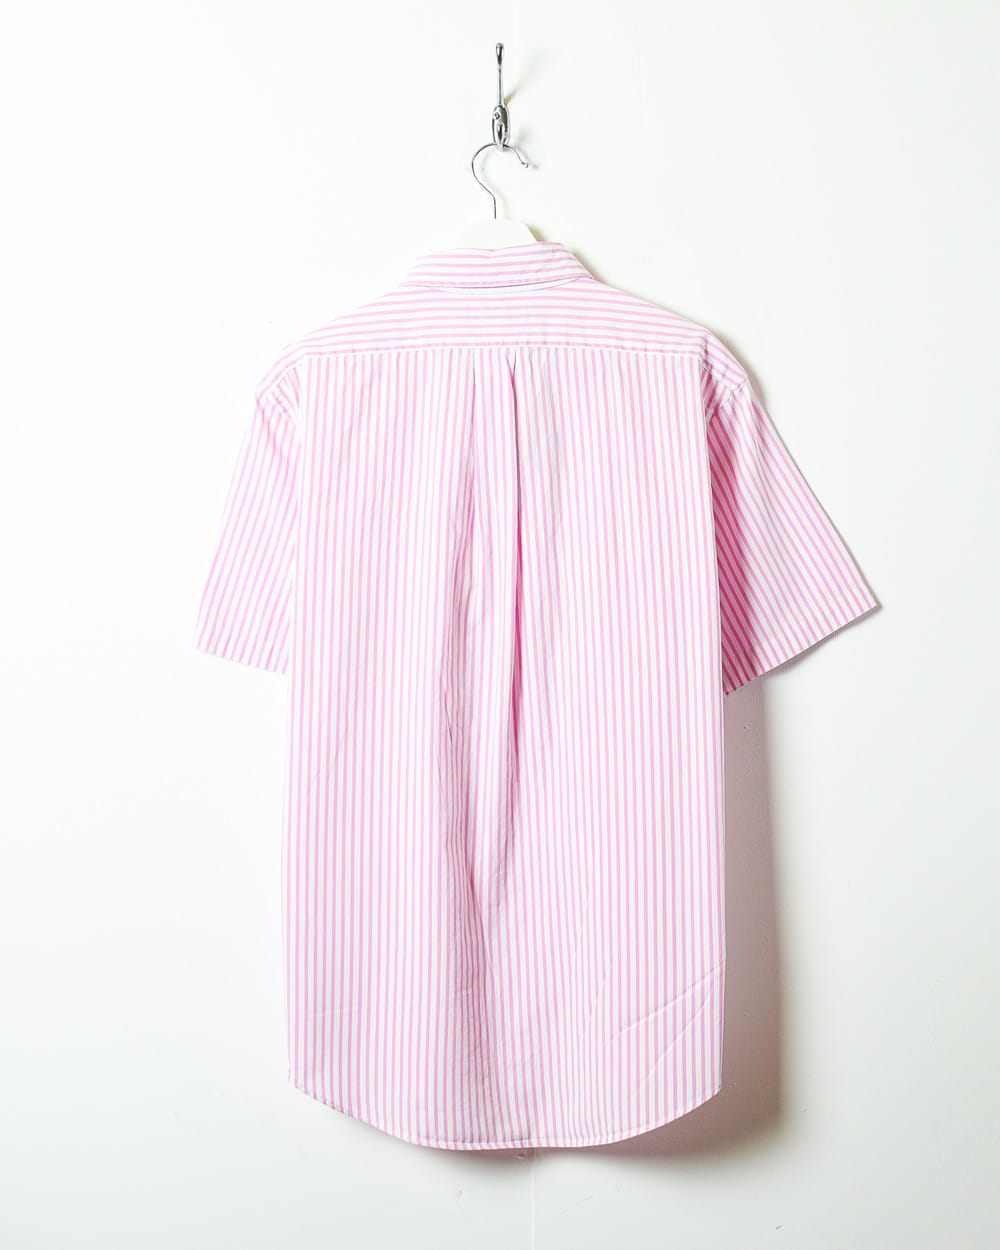 Polo Ralph Lauren Striped Short Sleeved Shirt - X-Large